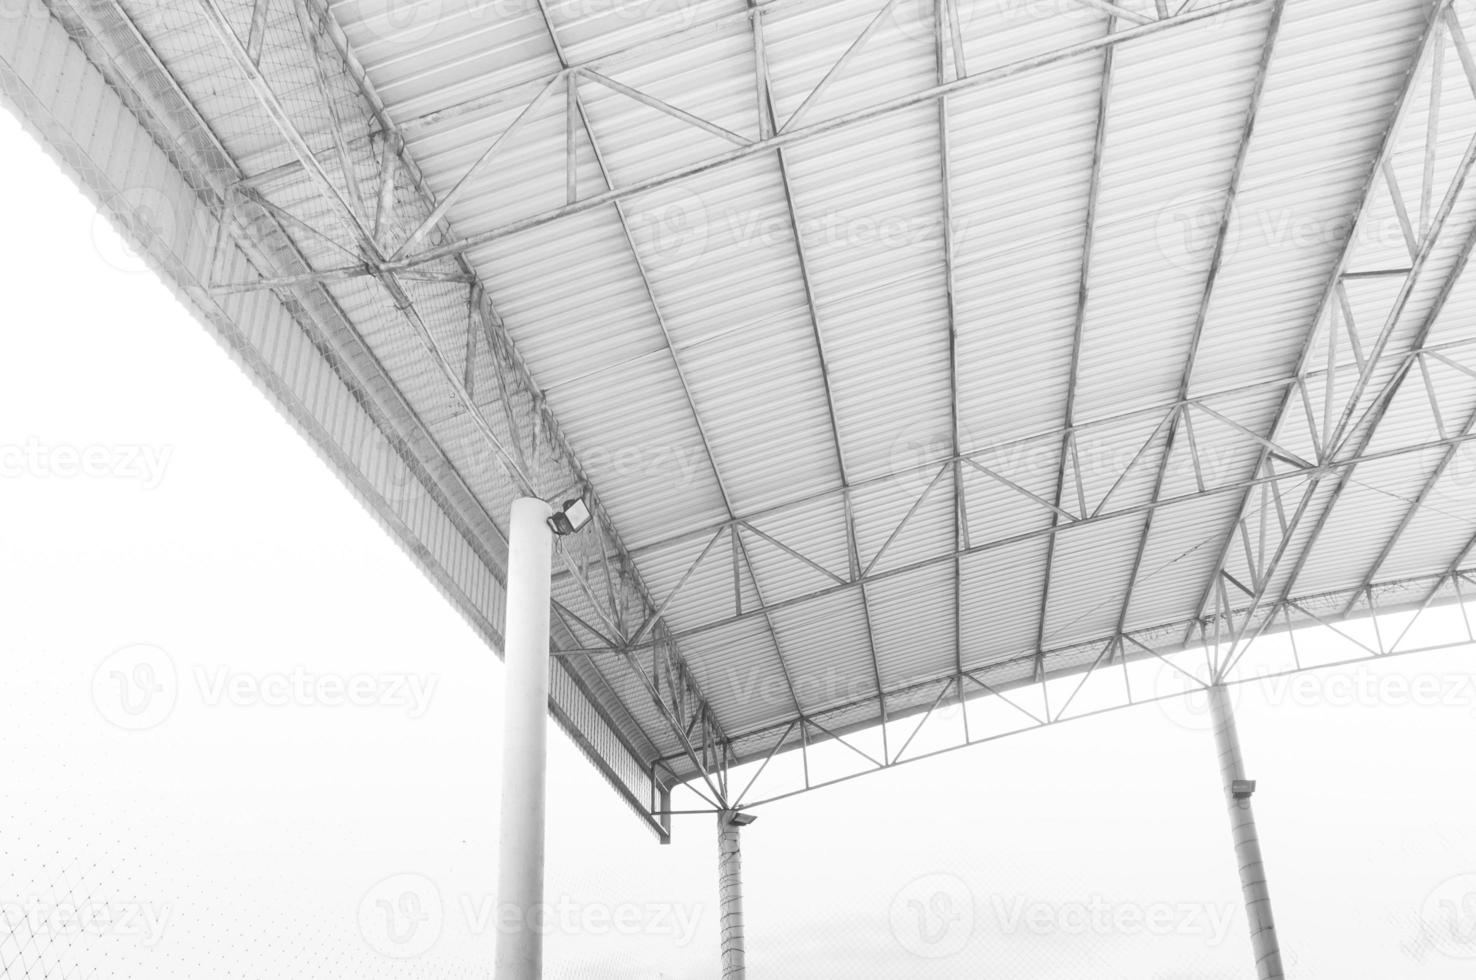 staal structuur dak detail , binnen leeg magazijn fabriek ,kromme lijn staal structuur detail van metaal dak bouw foto